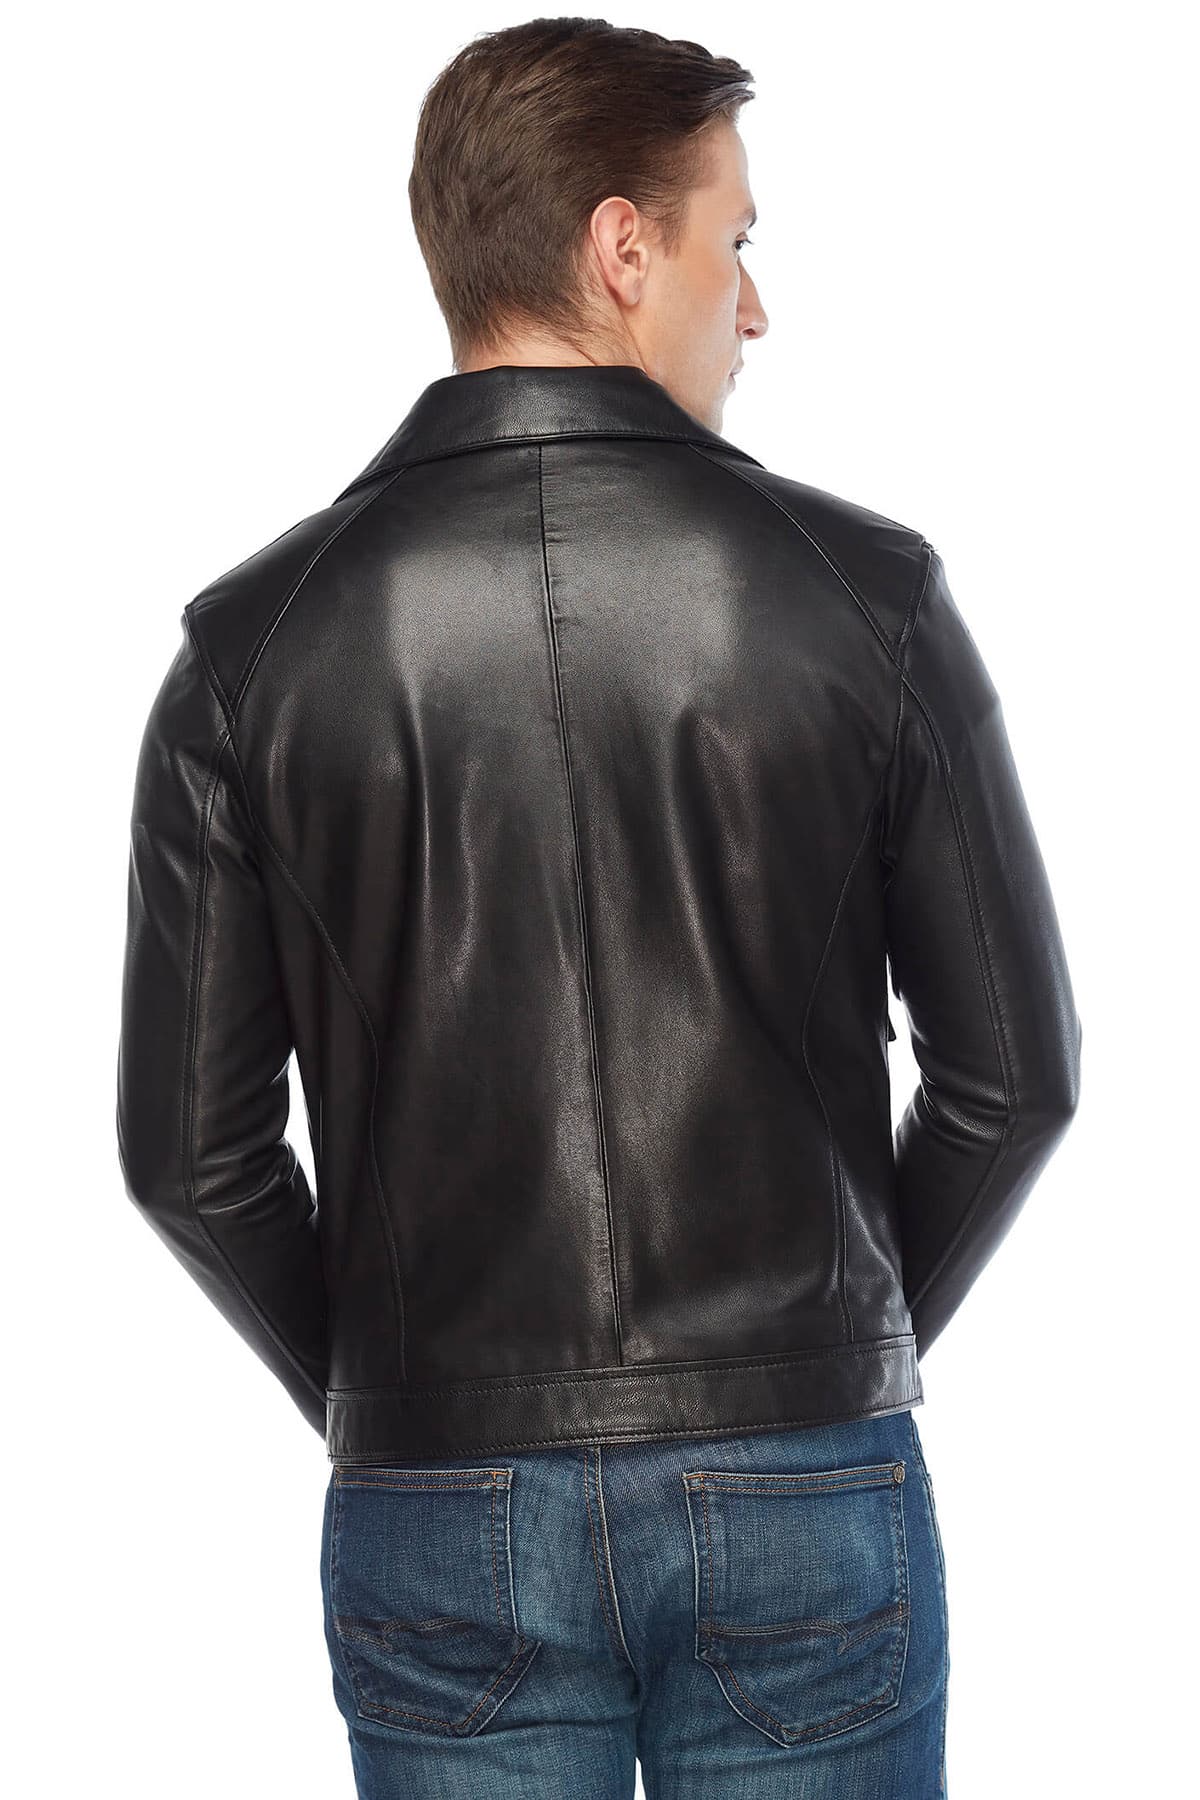 Orlando Bloom Genuine Leather Coat Black Back